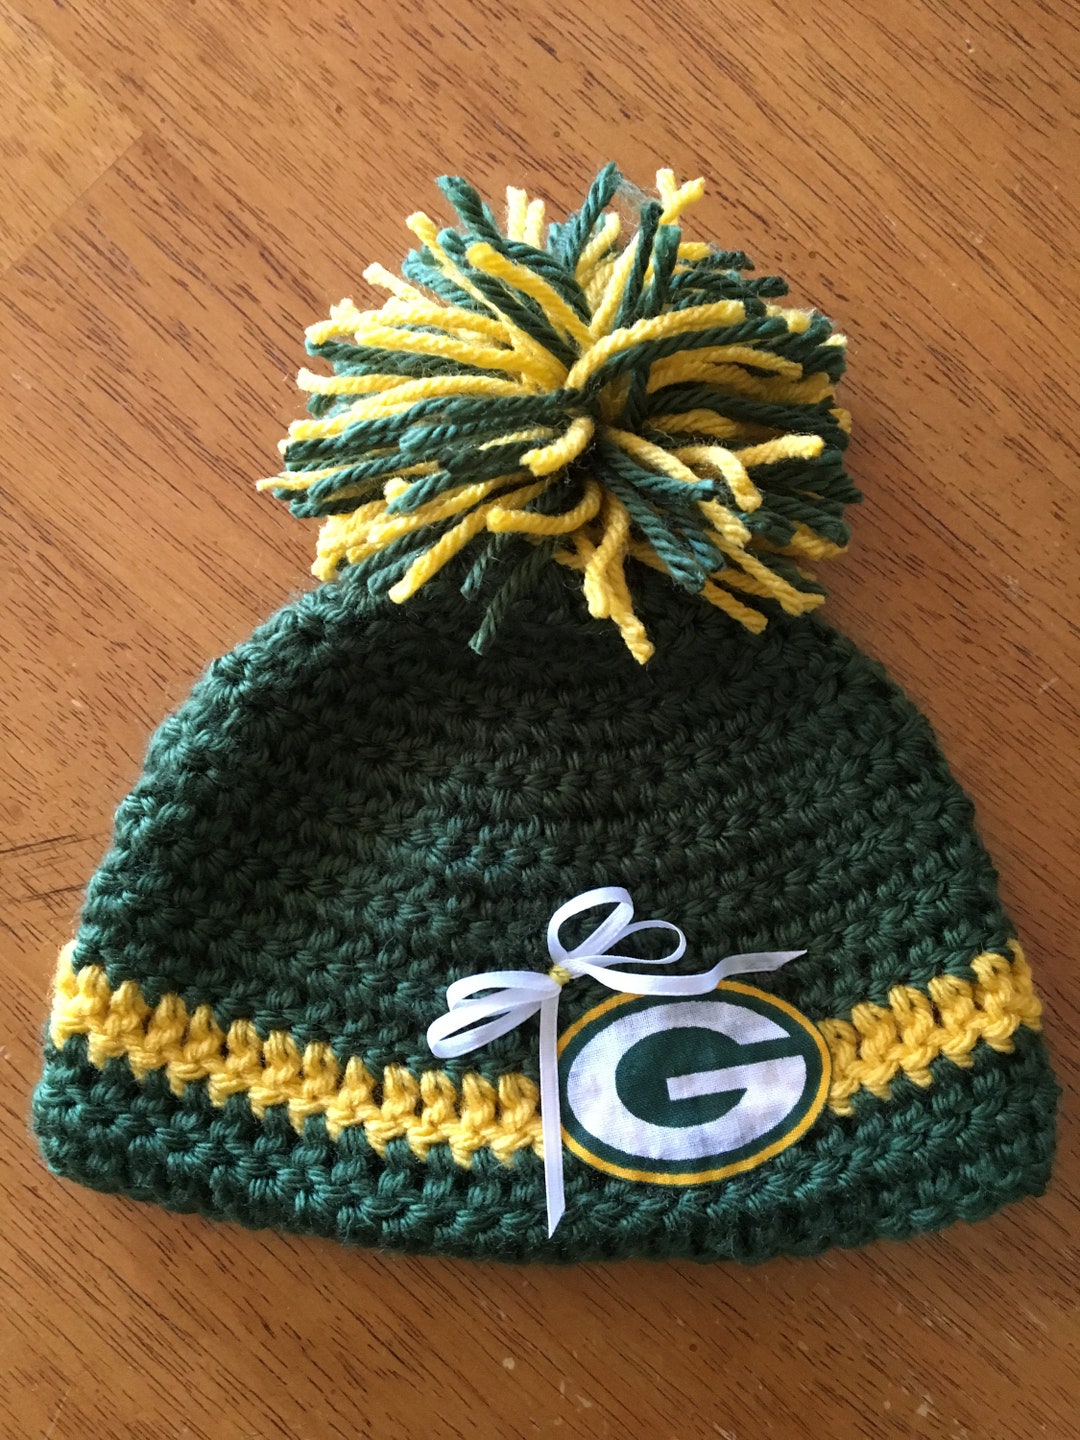 Crocheted Green Bay Packers Hat newborn Thru Adult - Etsy